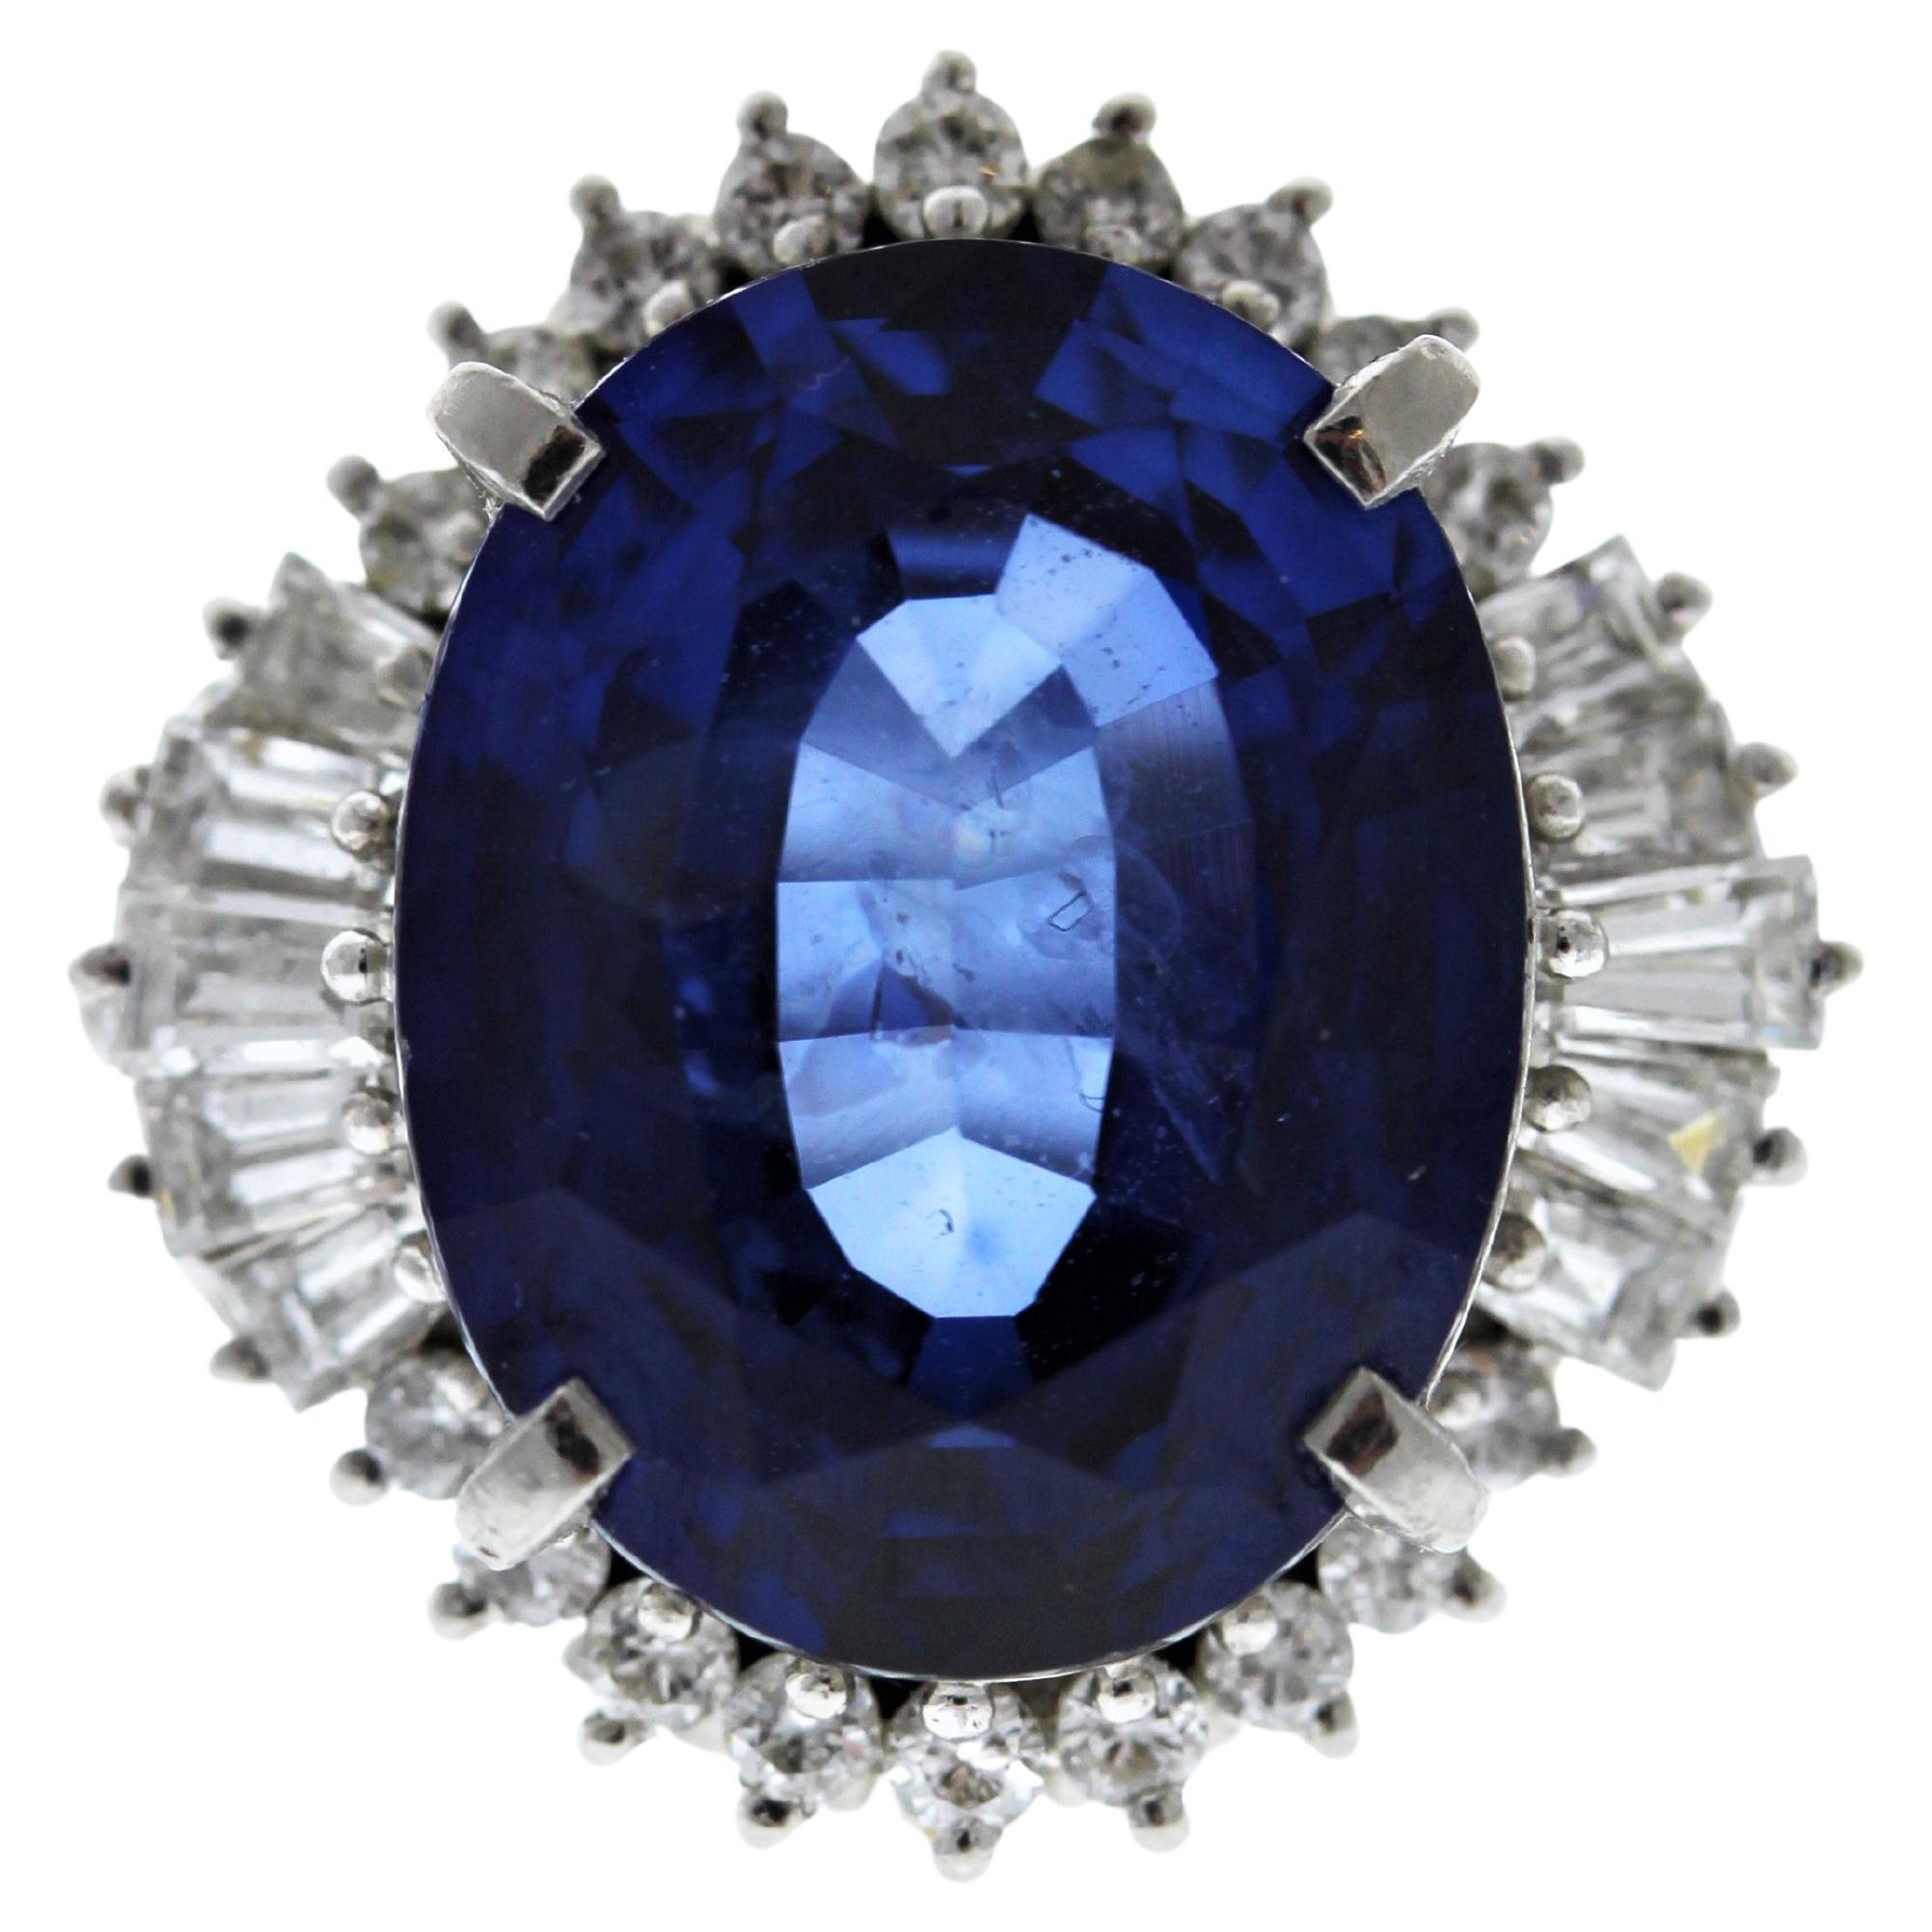 11.24ct Blue Sapphire and 1.04ctw Diamond Ring in Platinum